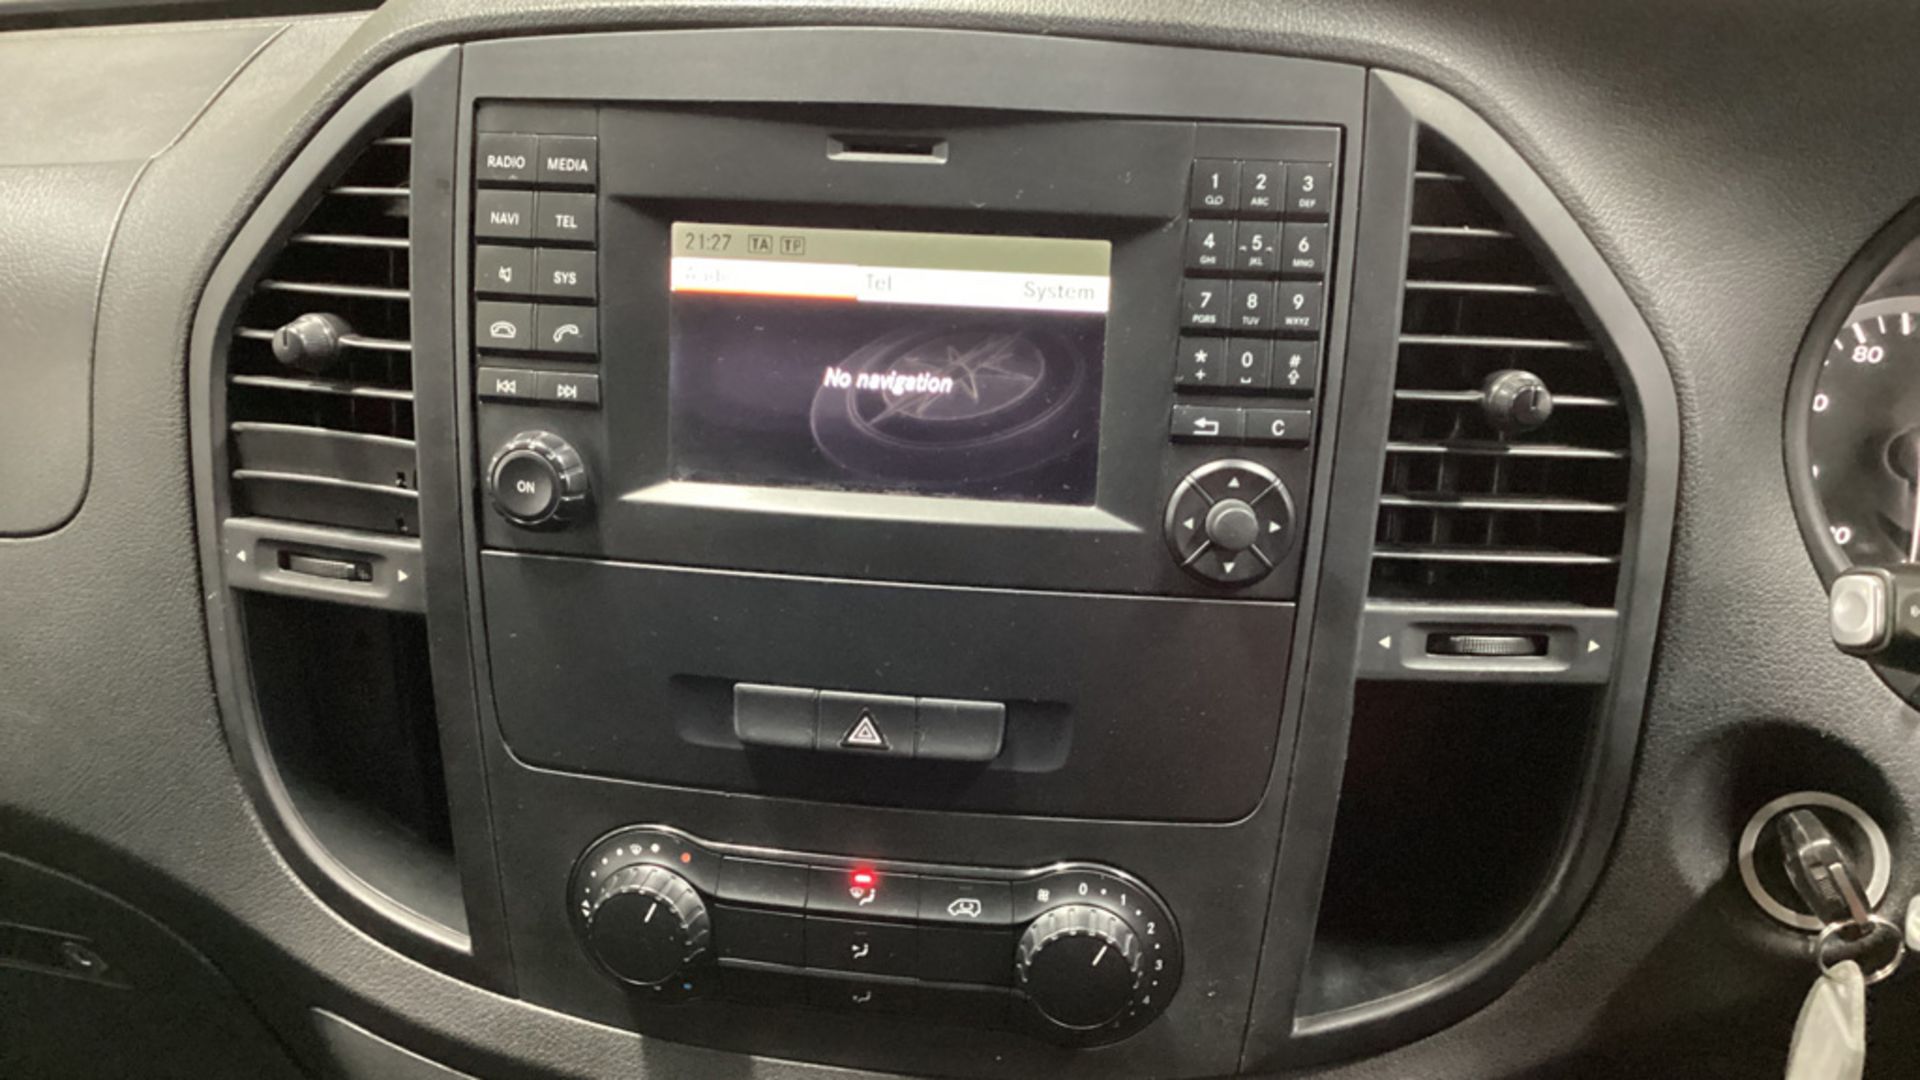 ** ON SALE ** Mercedes-Benz Vito 111 1.6 CDI 2015 - Long Wheel Base - No Vat - Navigation System - Image 8 of 9